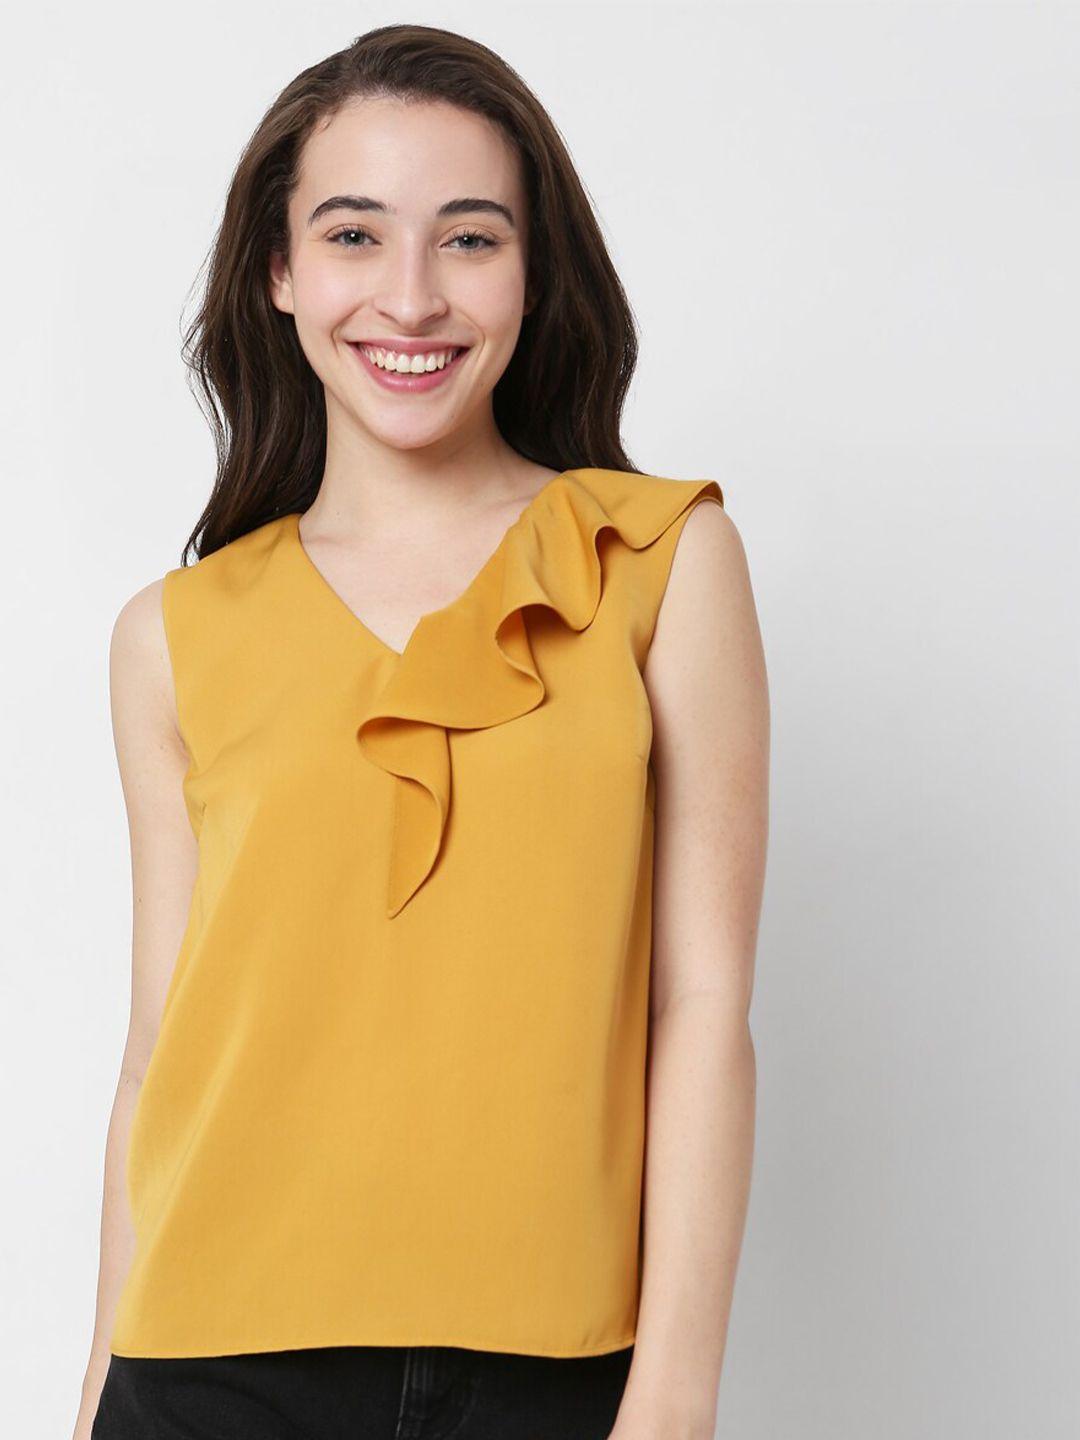 vero-moda-women-mustard-yellow-solid-top